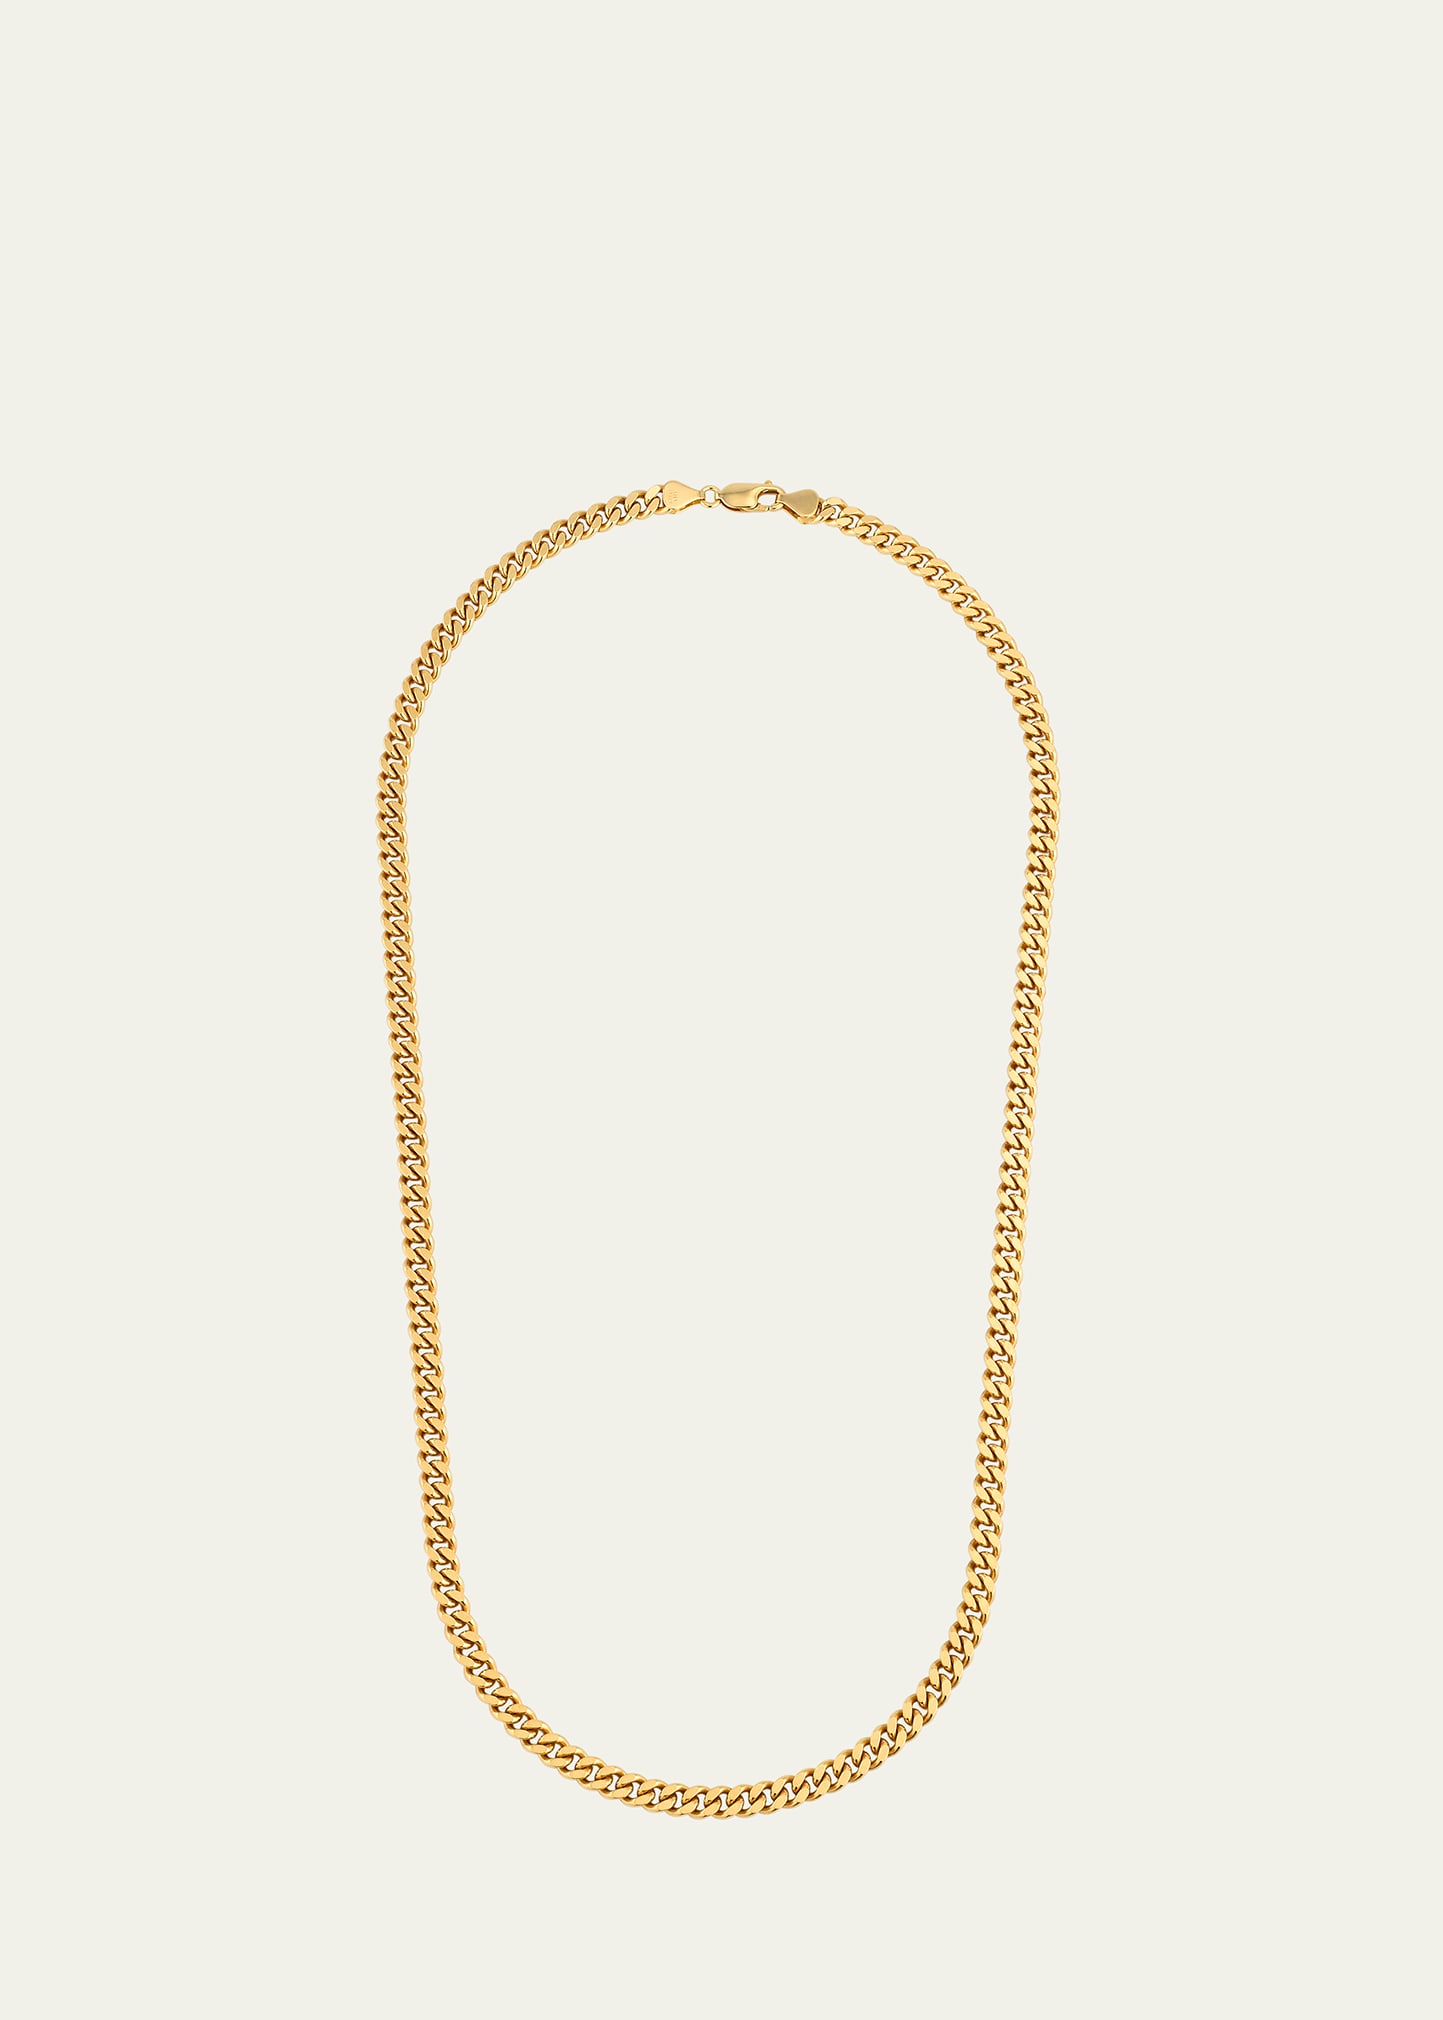 Men's 14K Yellow Gold XL Heavy Cuban Chain Necklace, 5.7mm, 24"L